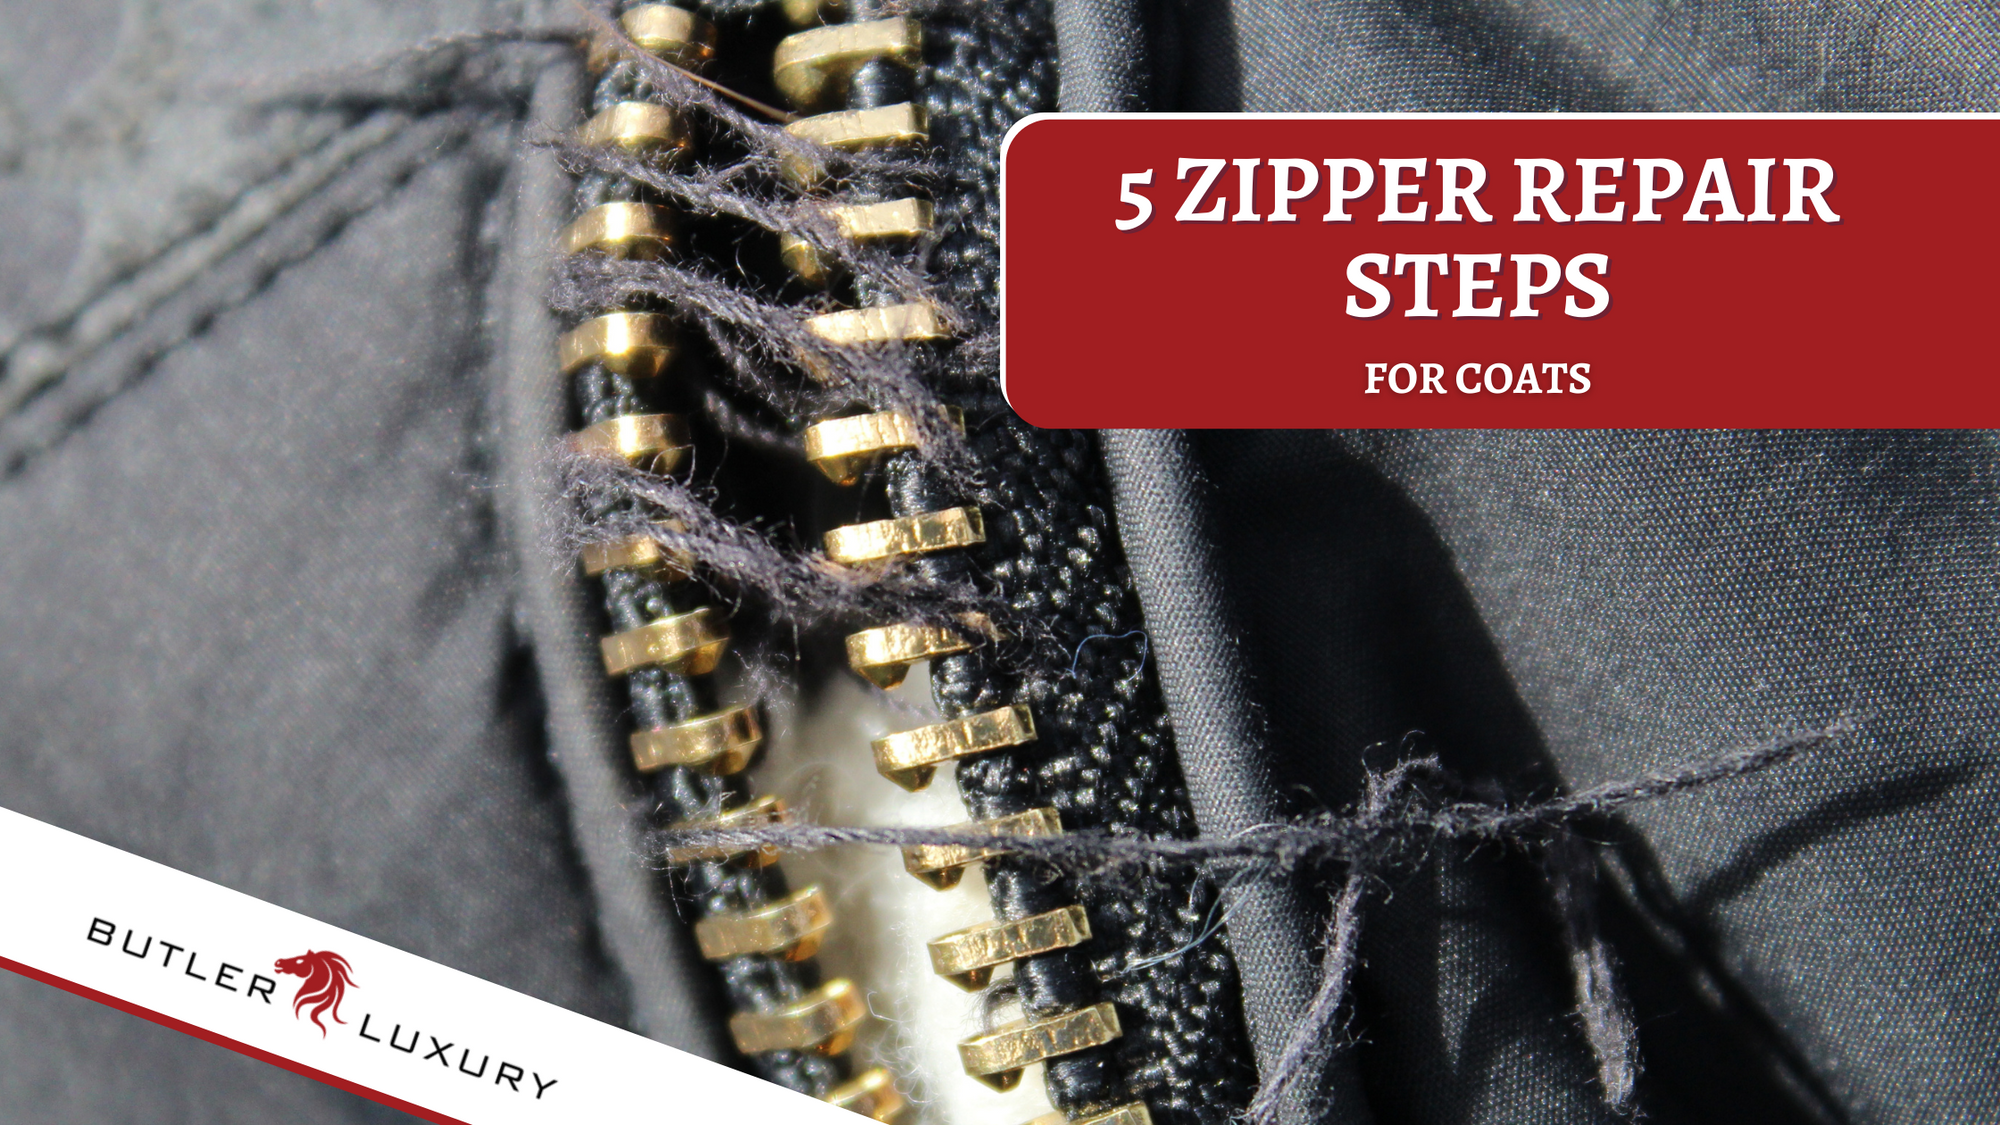 5 Zipper Repair Steps for Coats